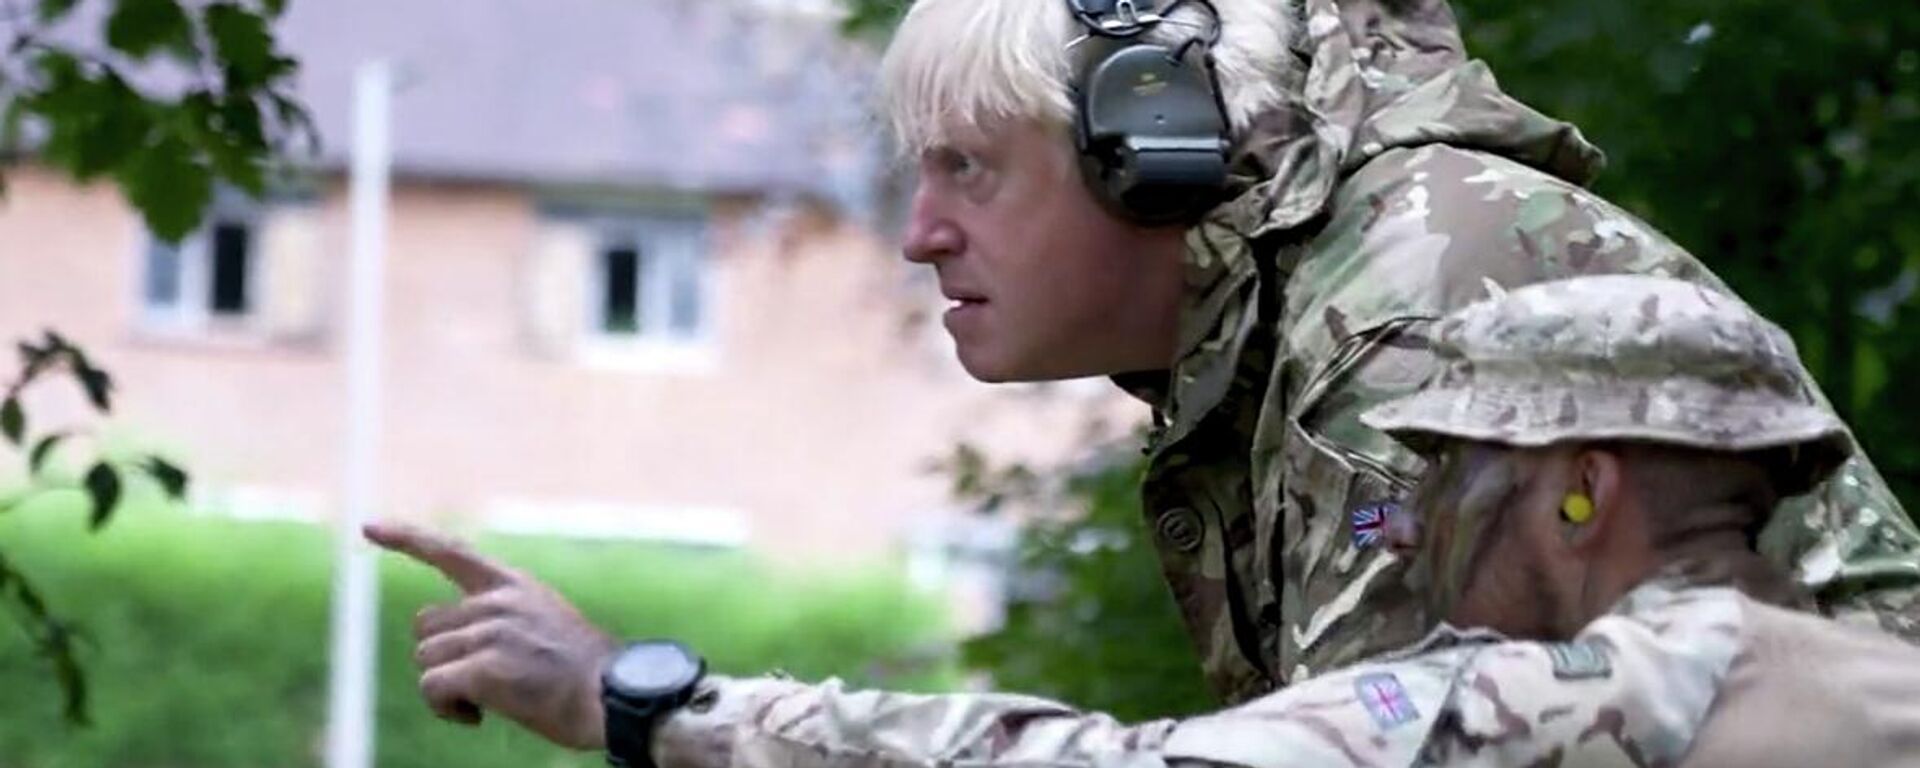 Boris Johnson, primer ministro de Reino Unido, durante el entrenamiento de las tropas ucranianas - Sputnik Mundo, 1920, 24.07.2022